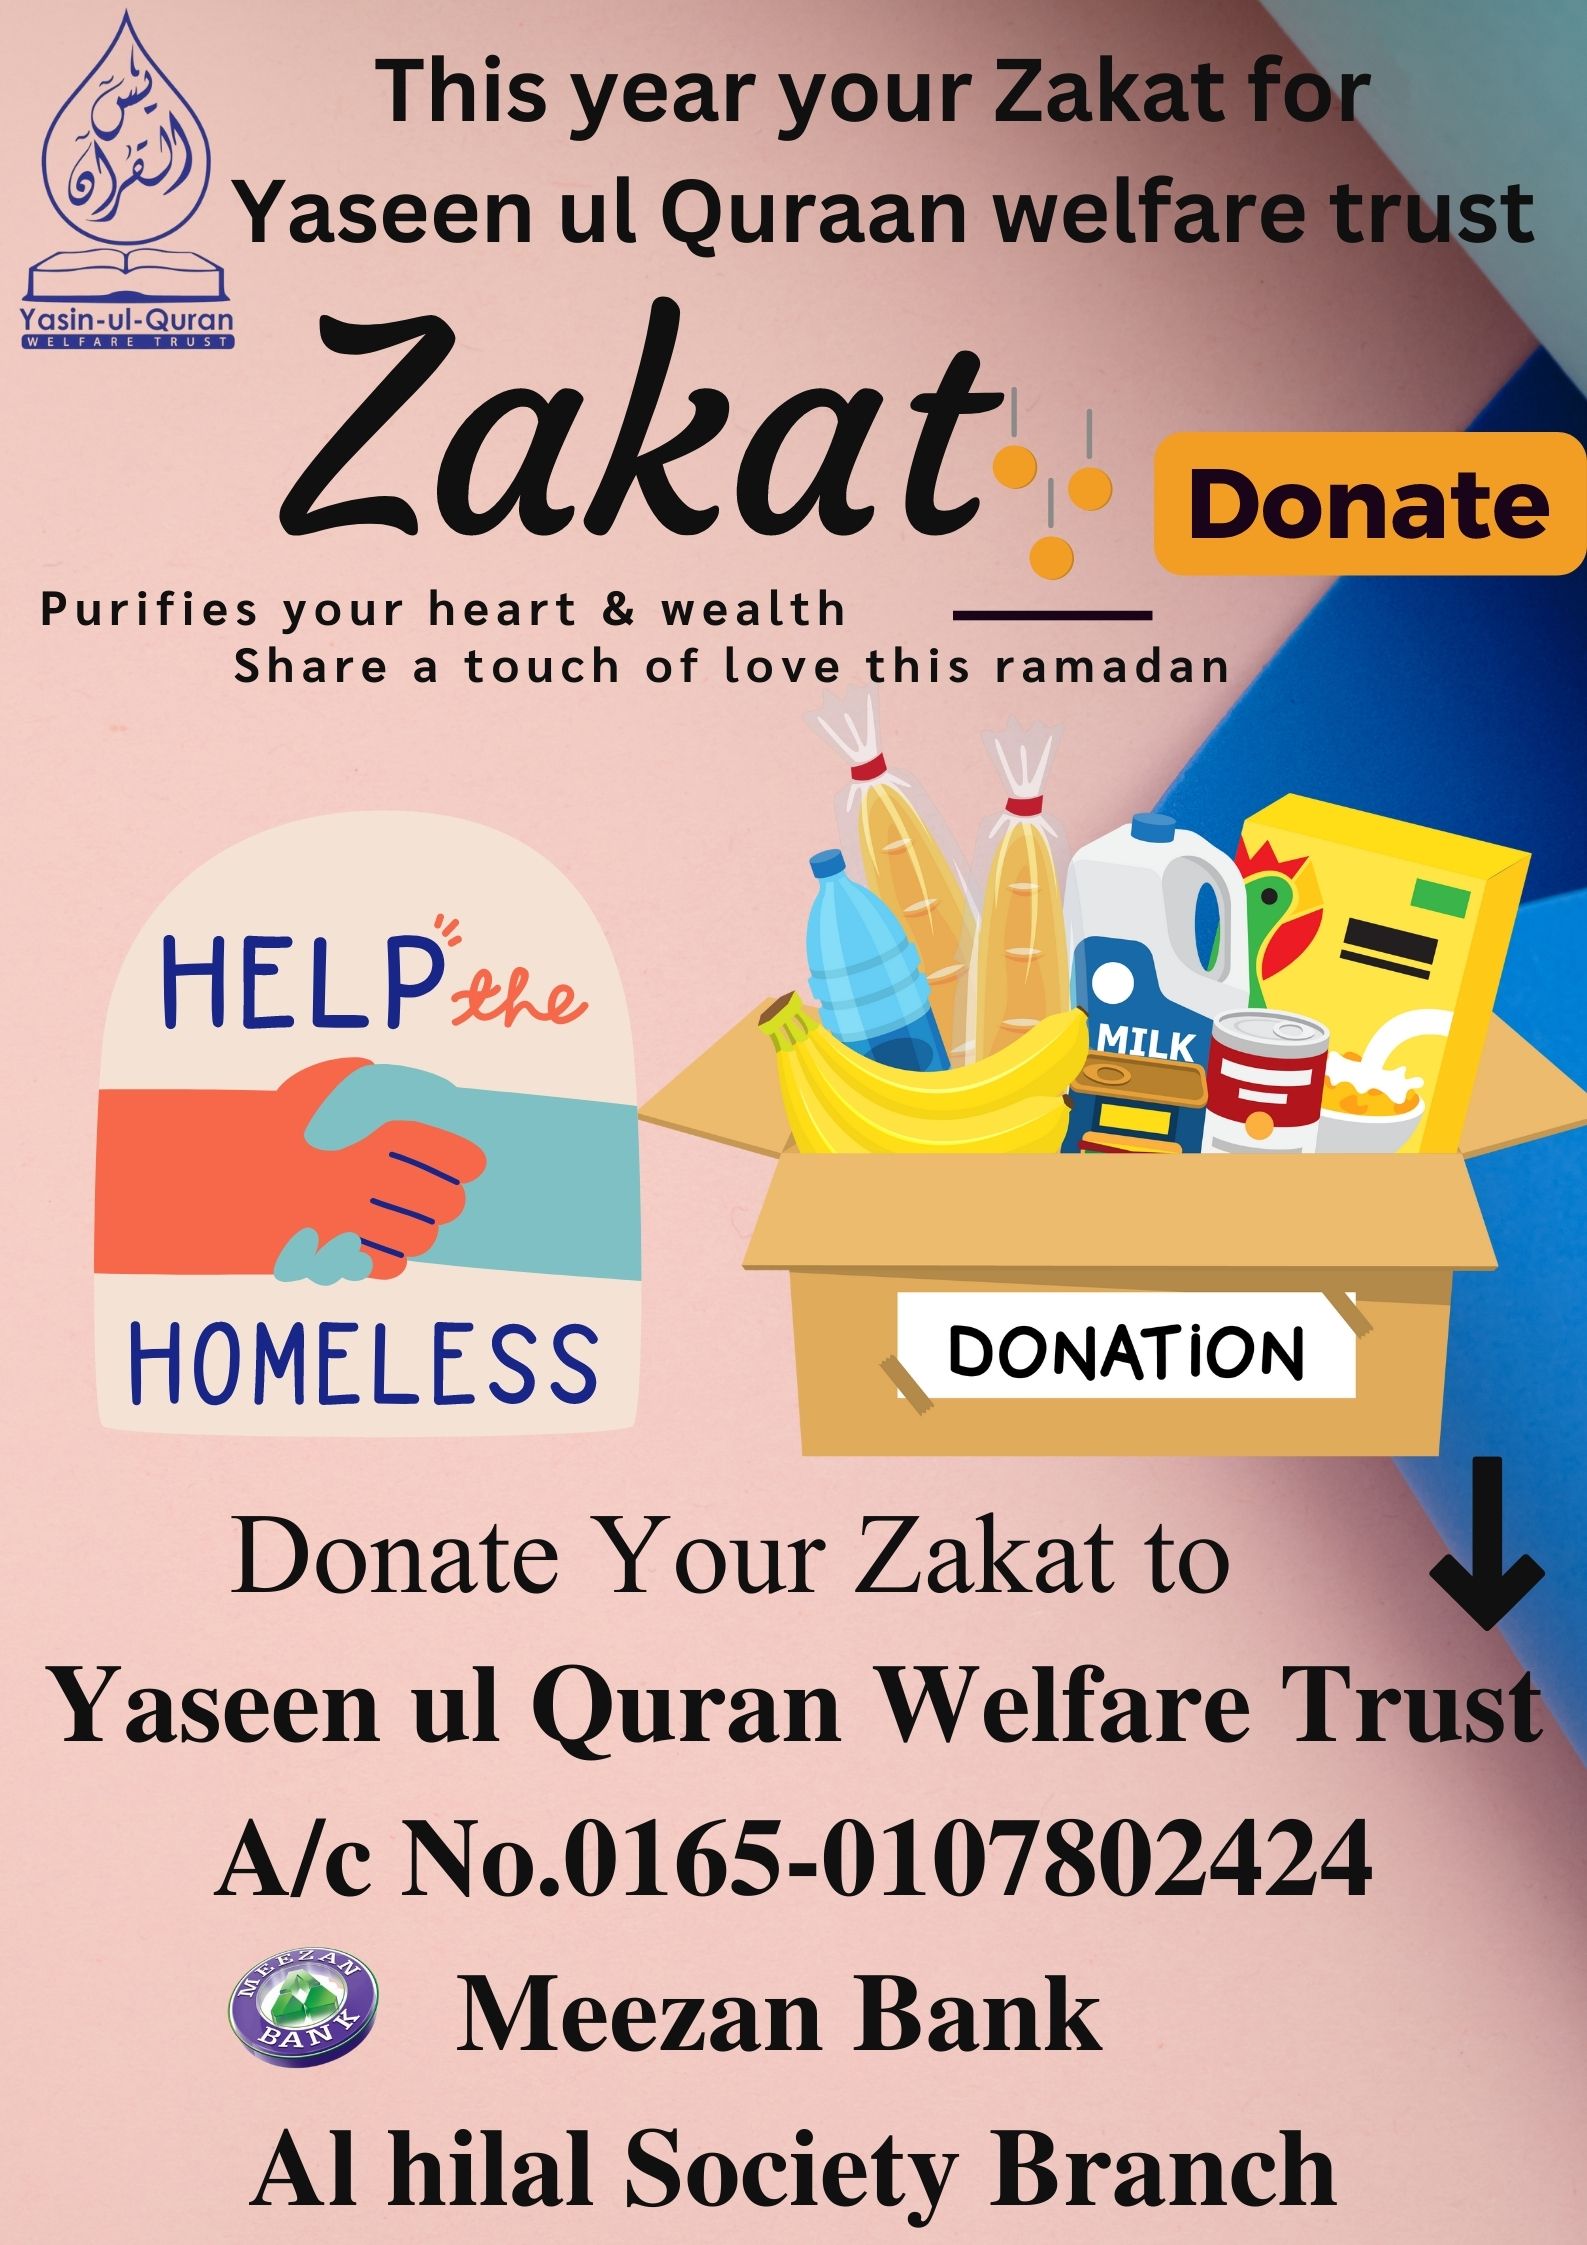 This year your zakat for yasin ul quran welfare trust